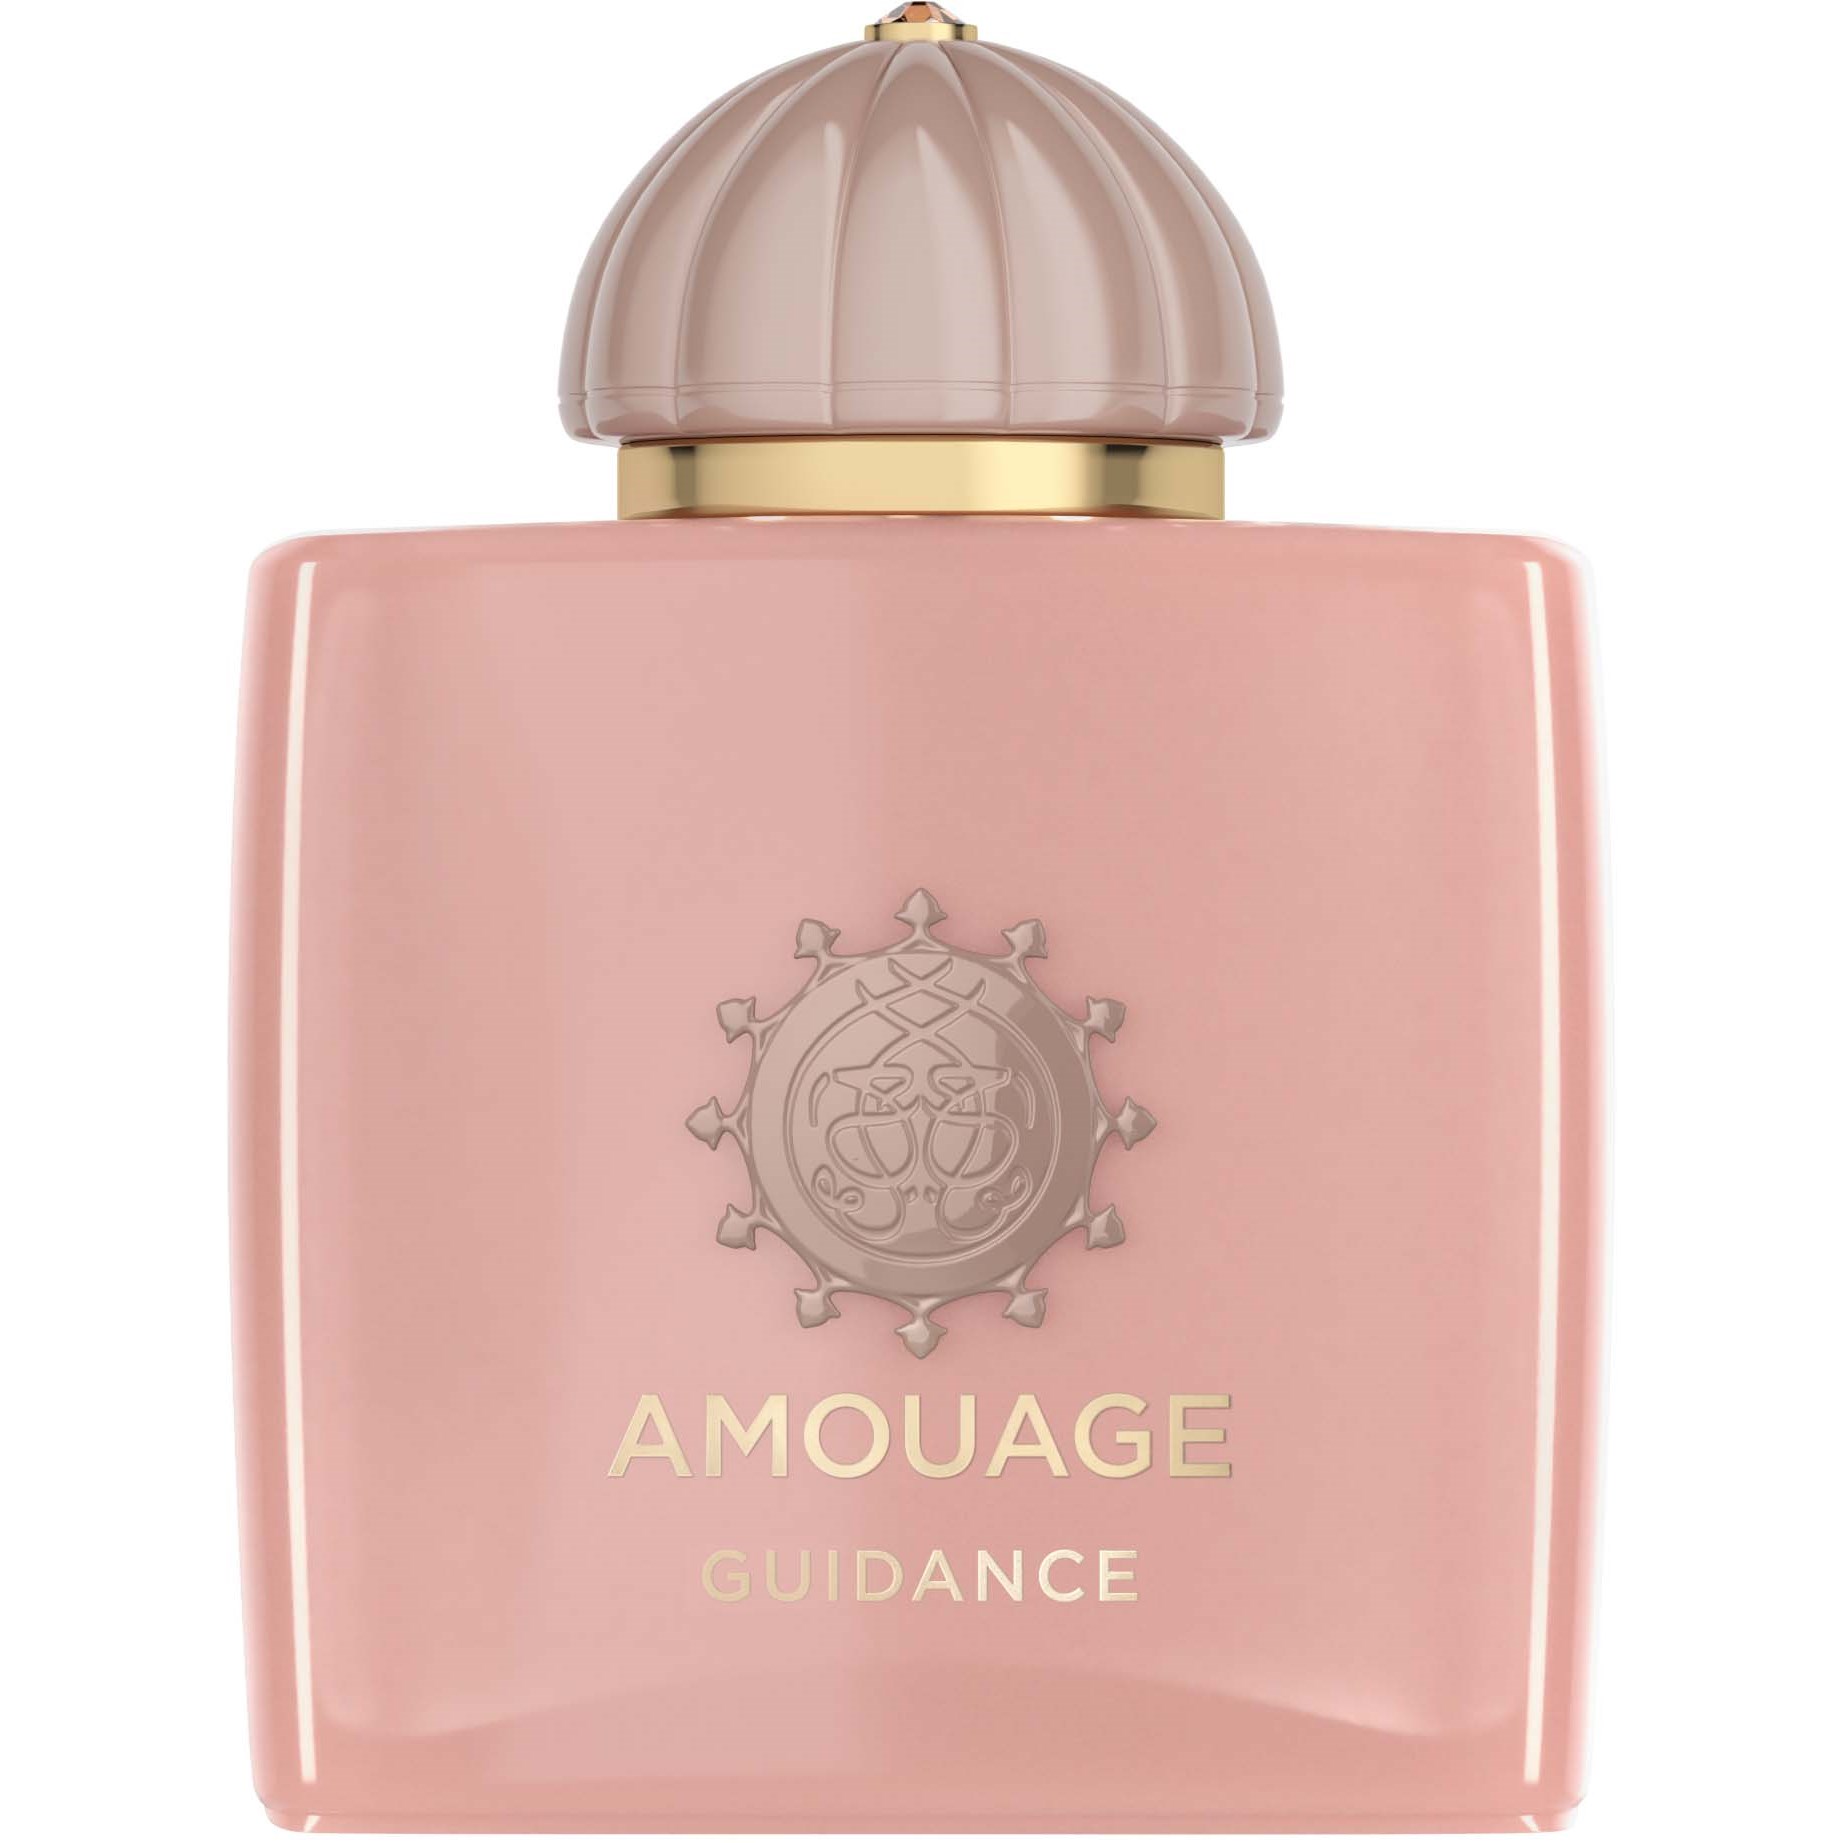 Zdjęcia - Perfuma damska Amouage Guidance Woman Eau de Parfum 100 ml 